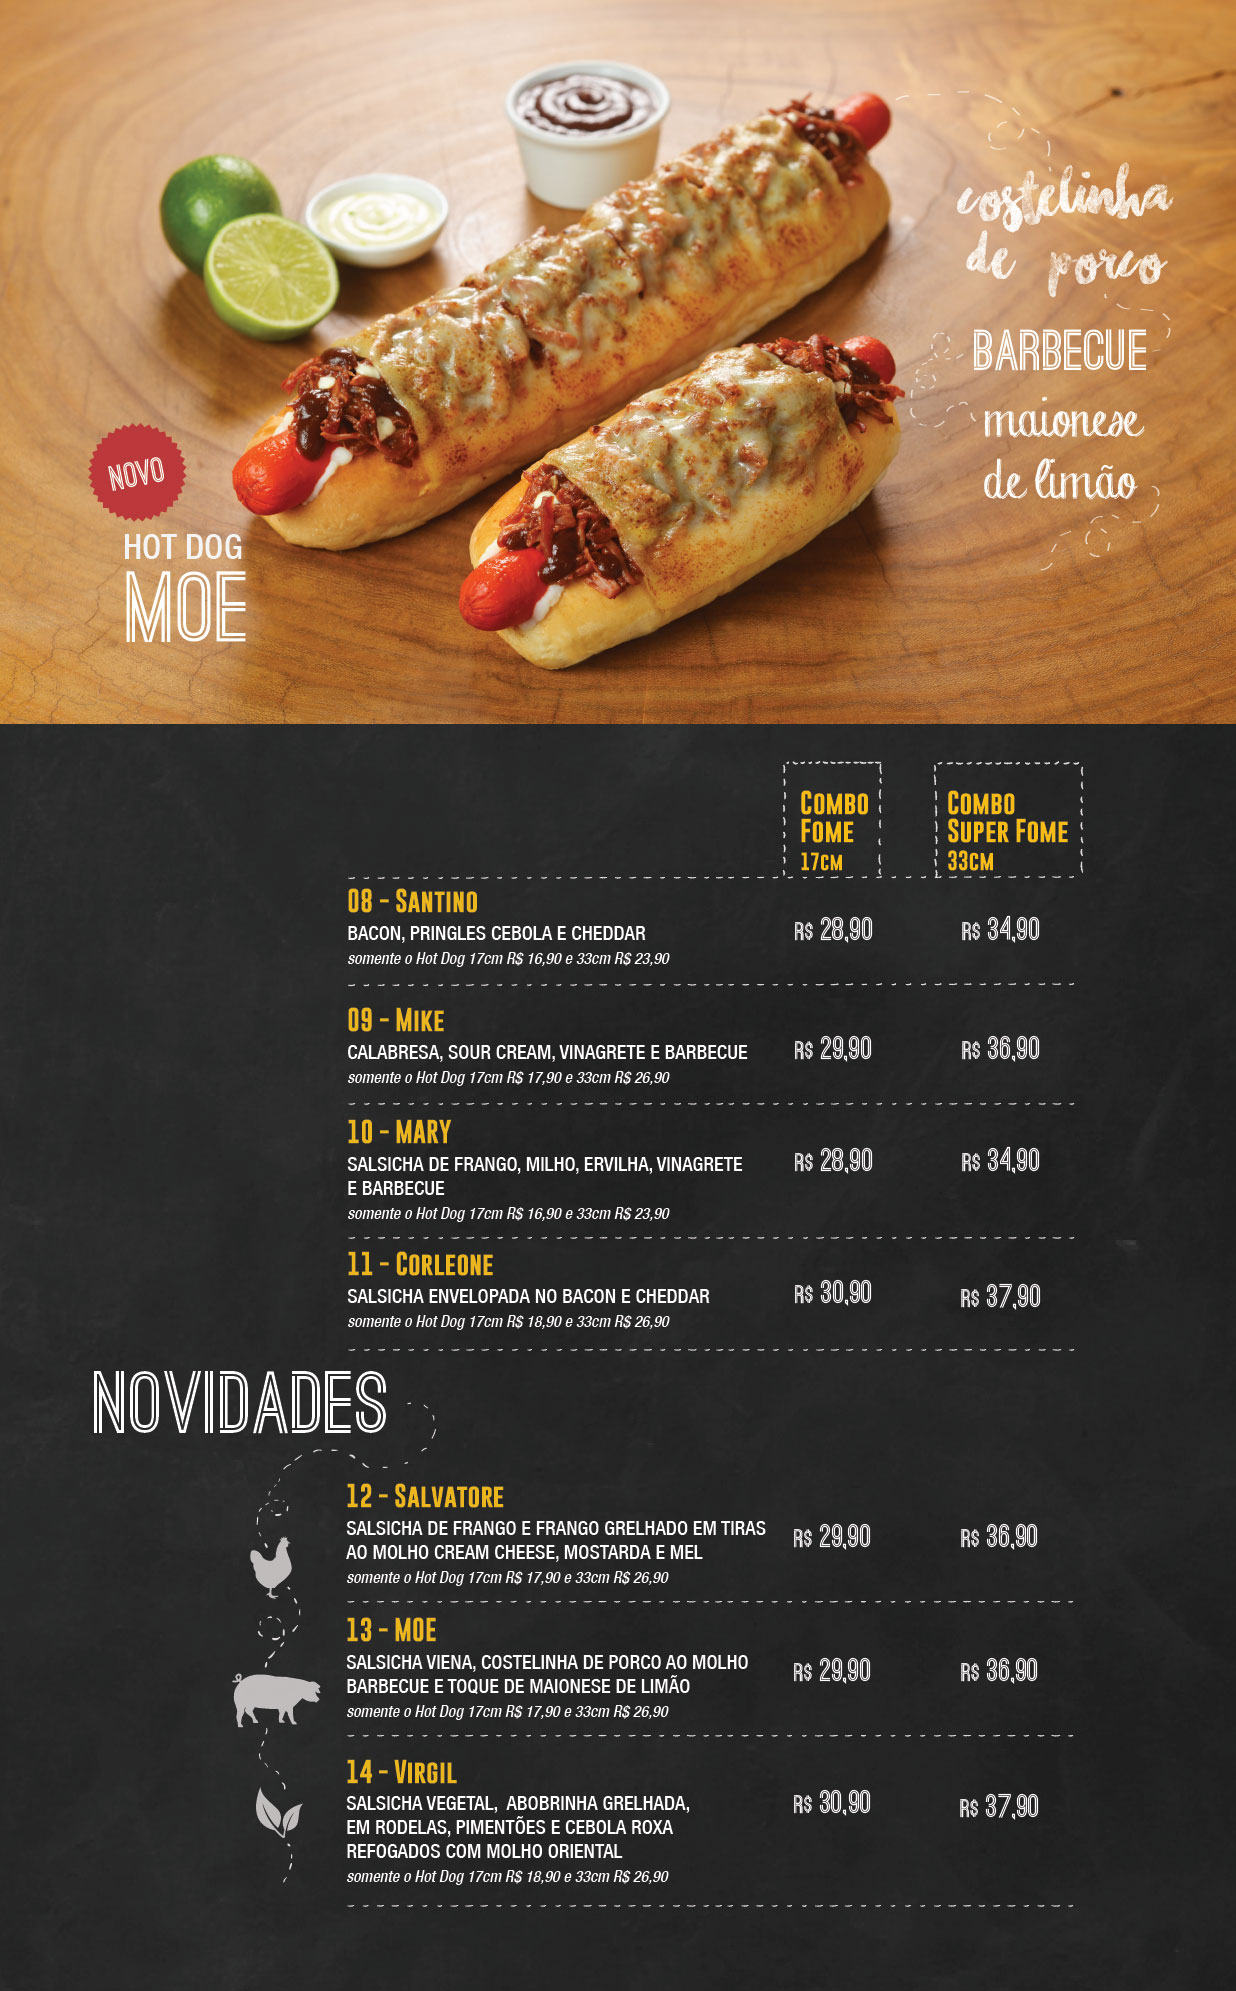 JA1000 HOTDOGUERIA & PETISCARIA, Araraquara - Menu, Prices & Restaurant  Reviews - Tripadvisor